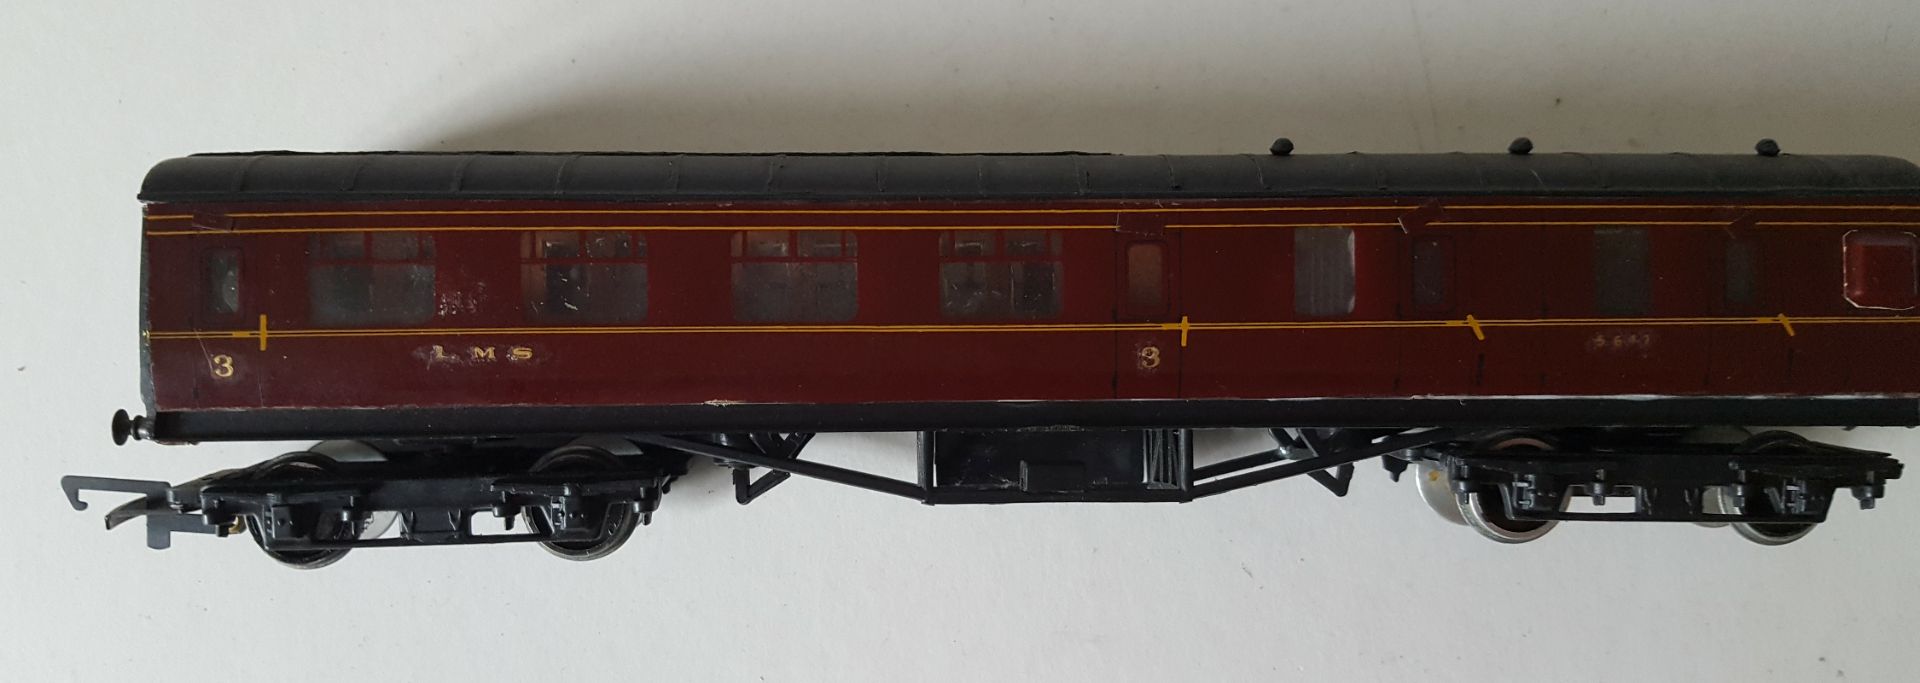 Vintage Retro 3 x Model Train Coaches 00 Guage - Image 4 of 4